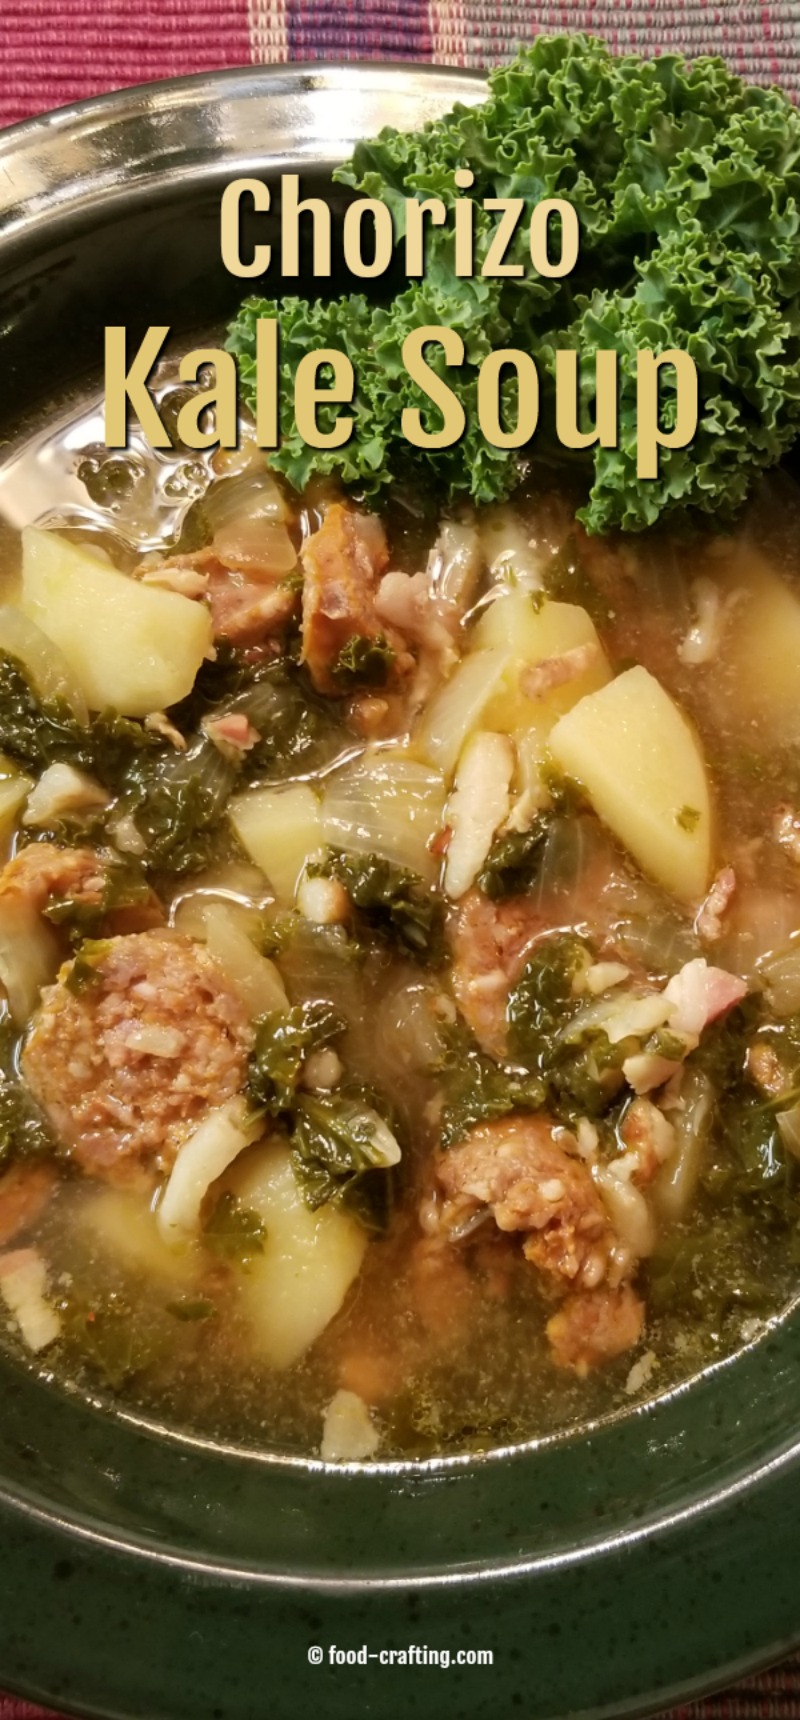 Bowl of Argentinian chorizo kale soup recipe with potatoes